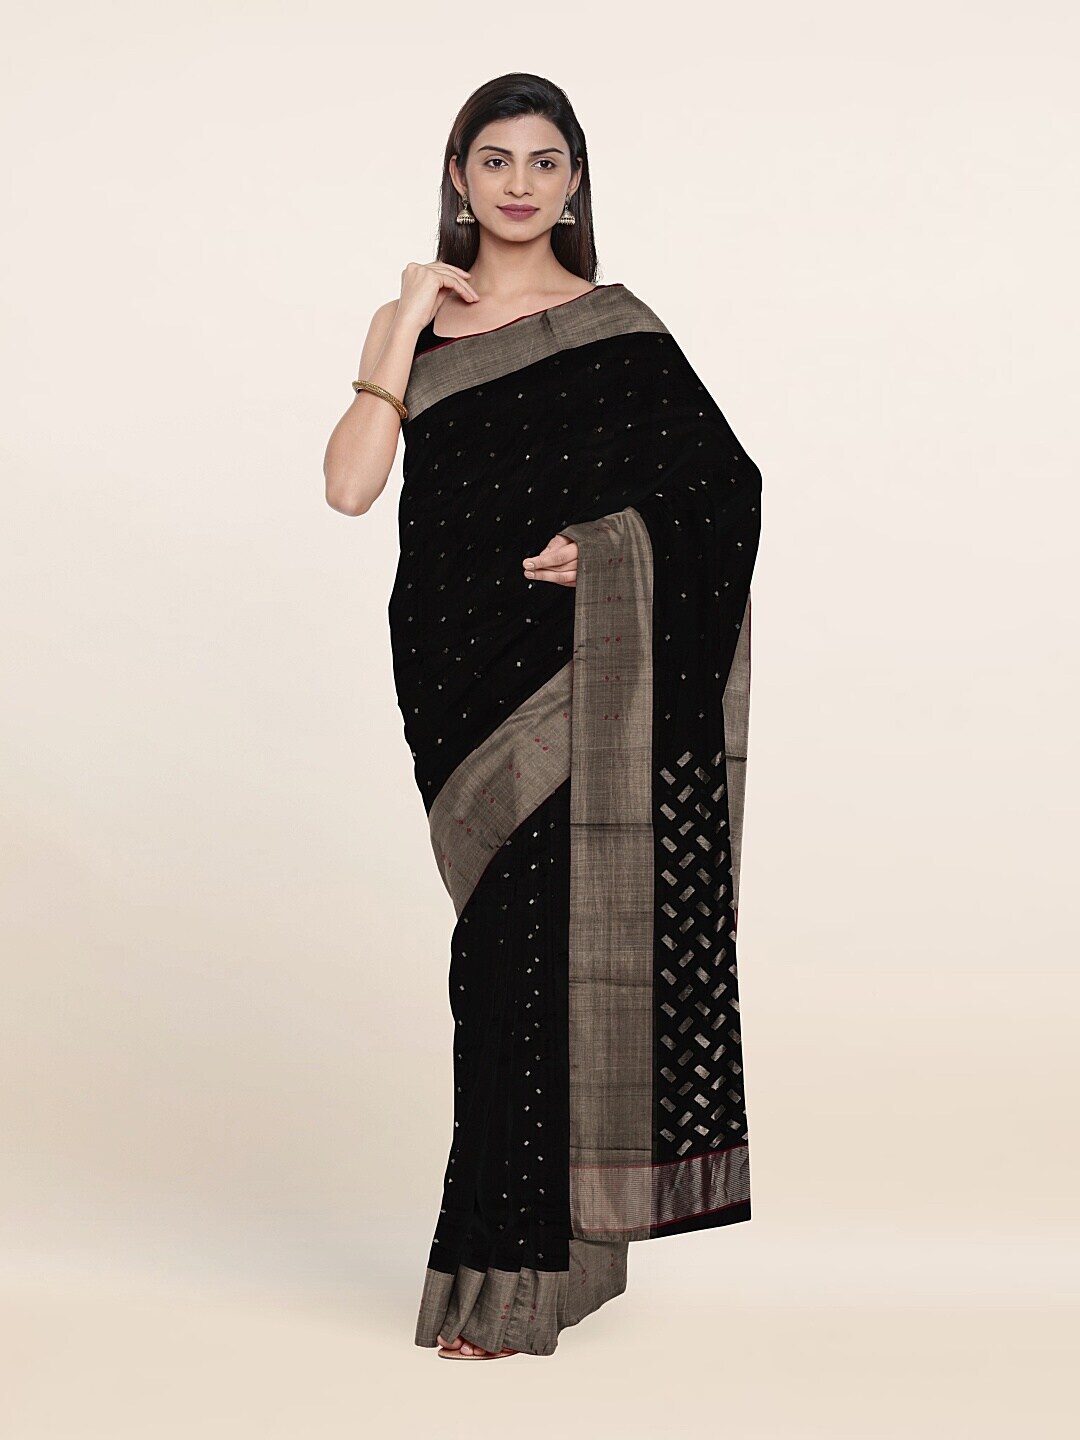 Pothys Black & Gold-Toned Zari Silk Cotton Saree Price in India